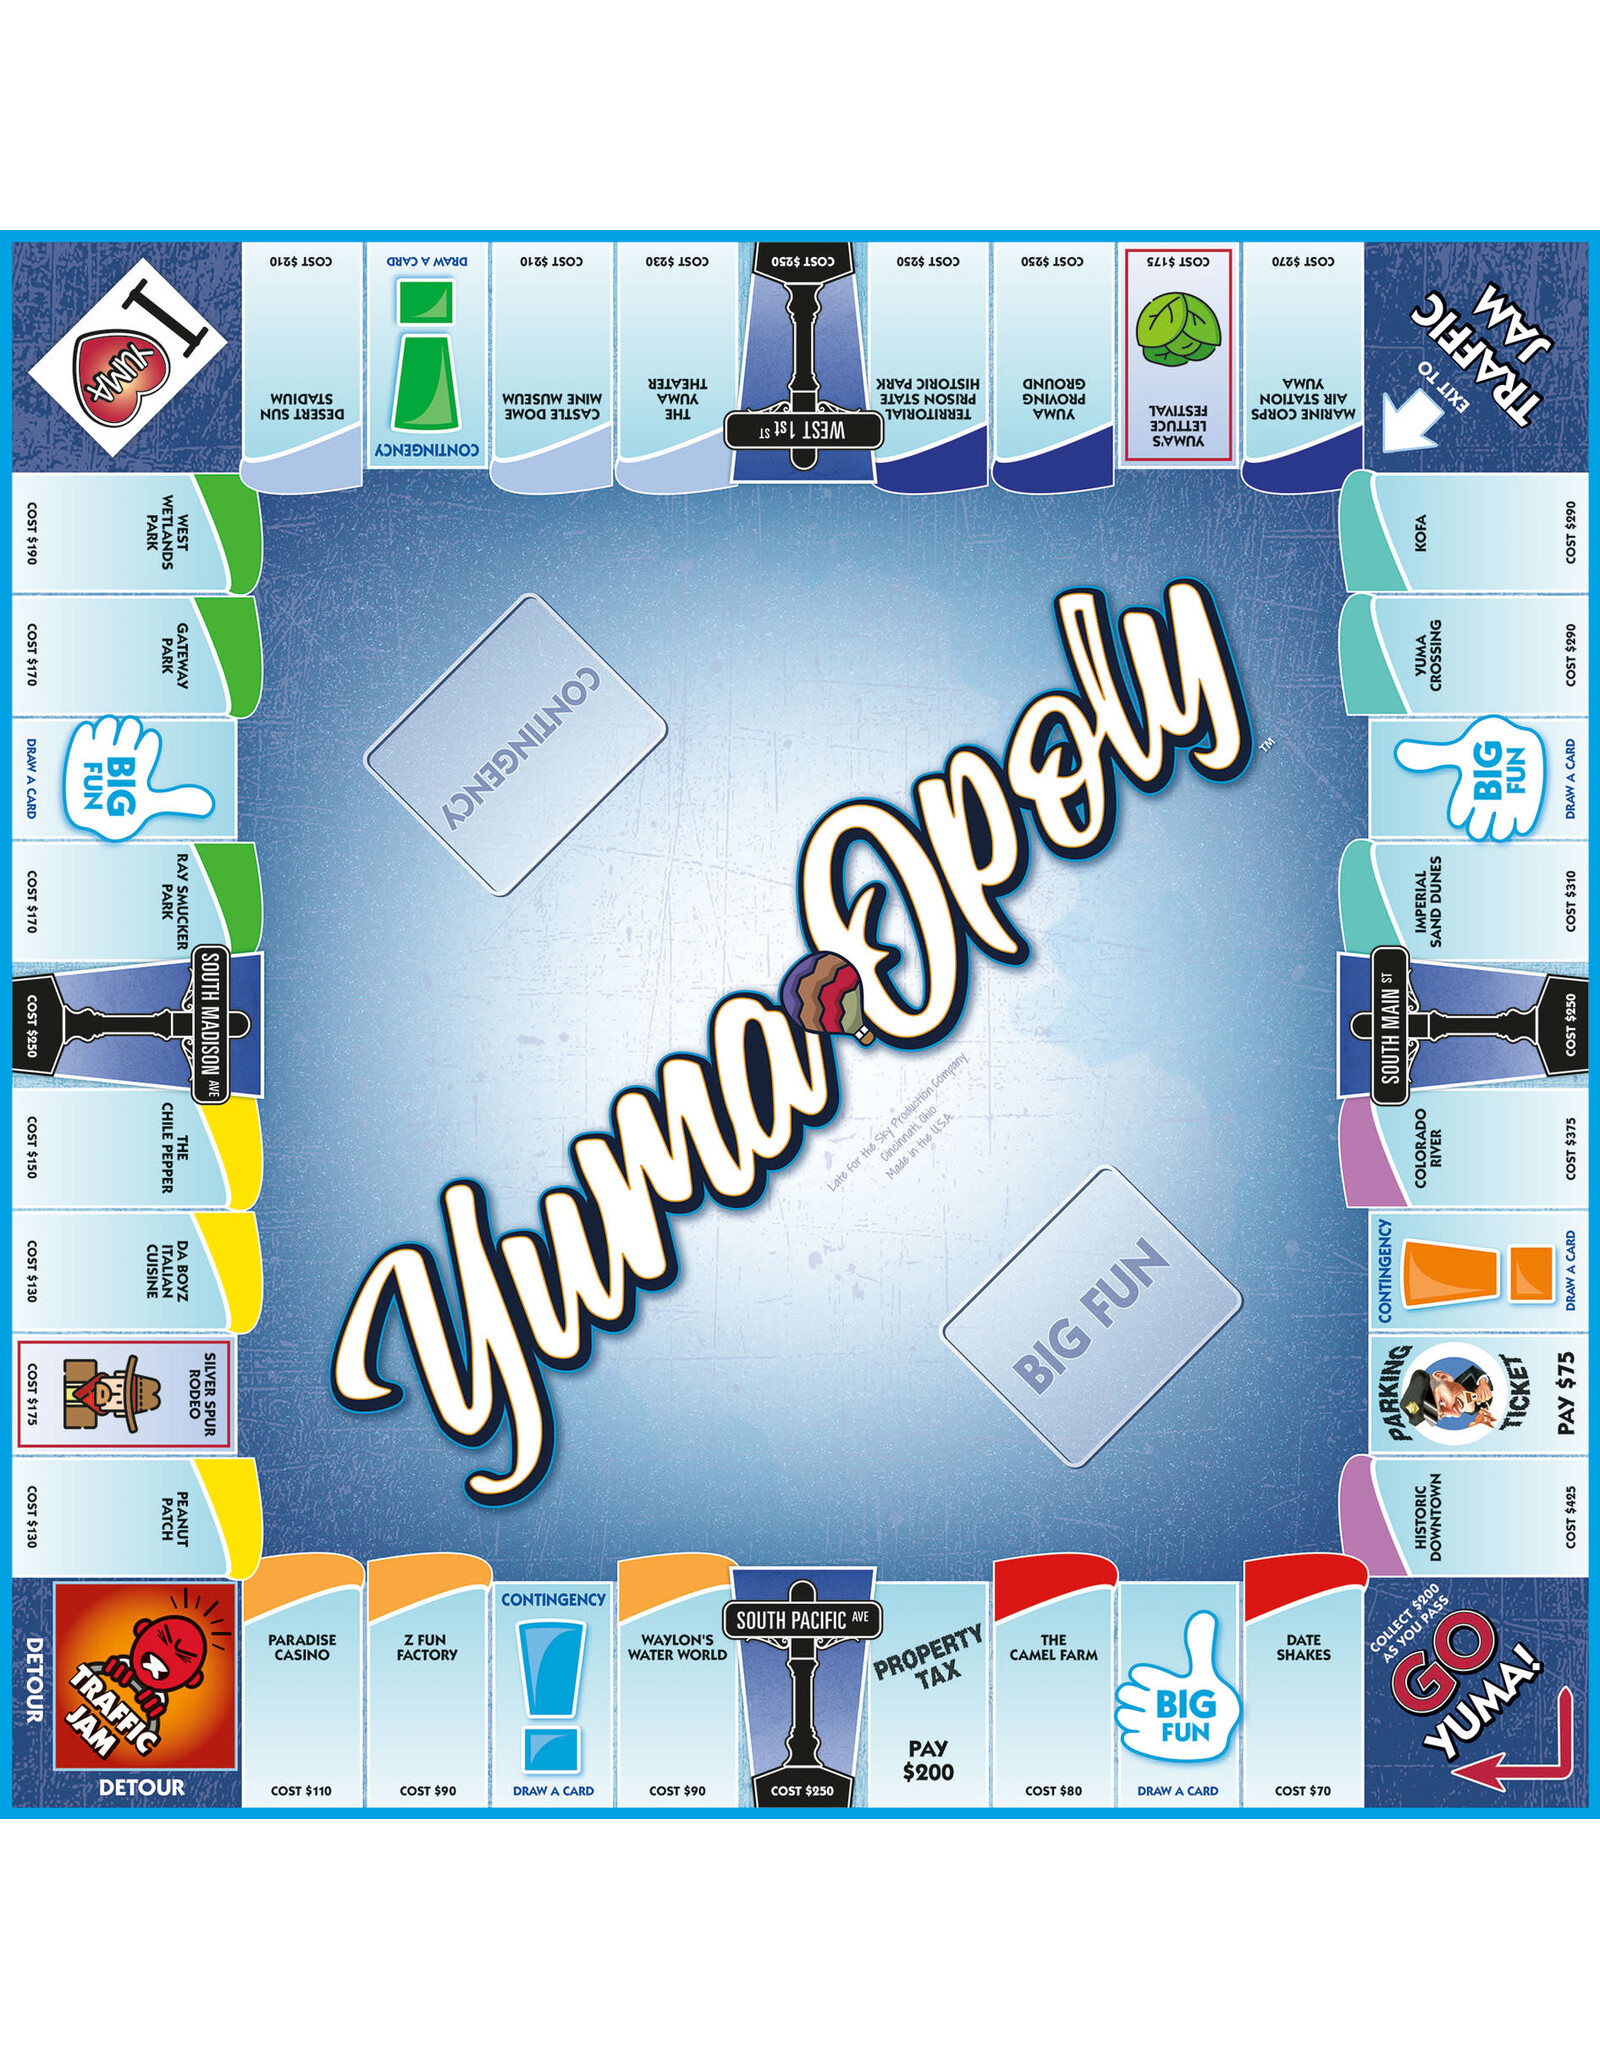 Yumaopoly Game